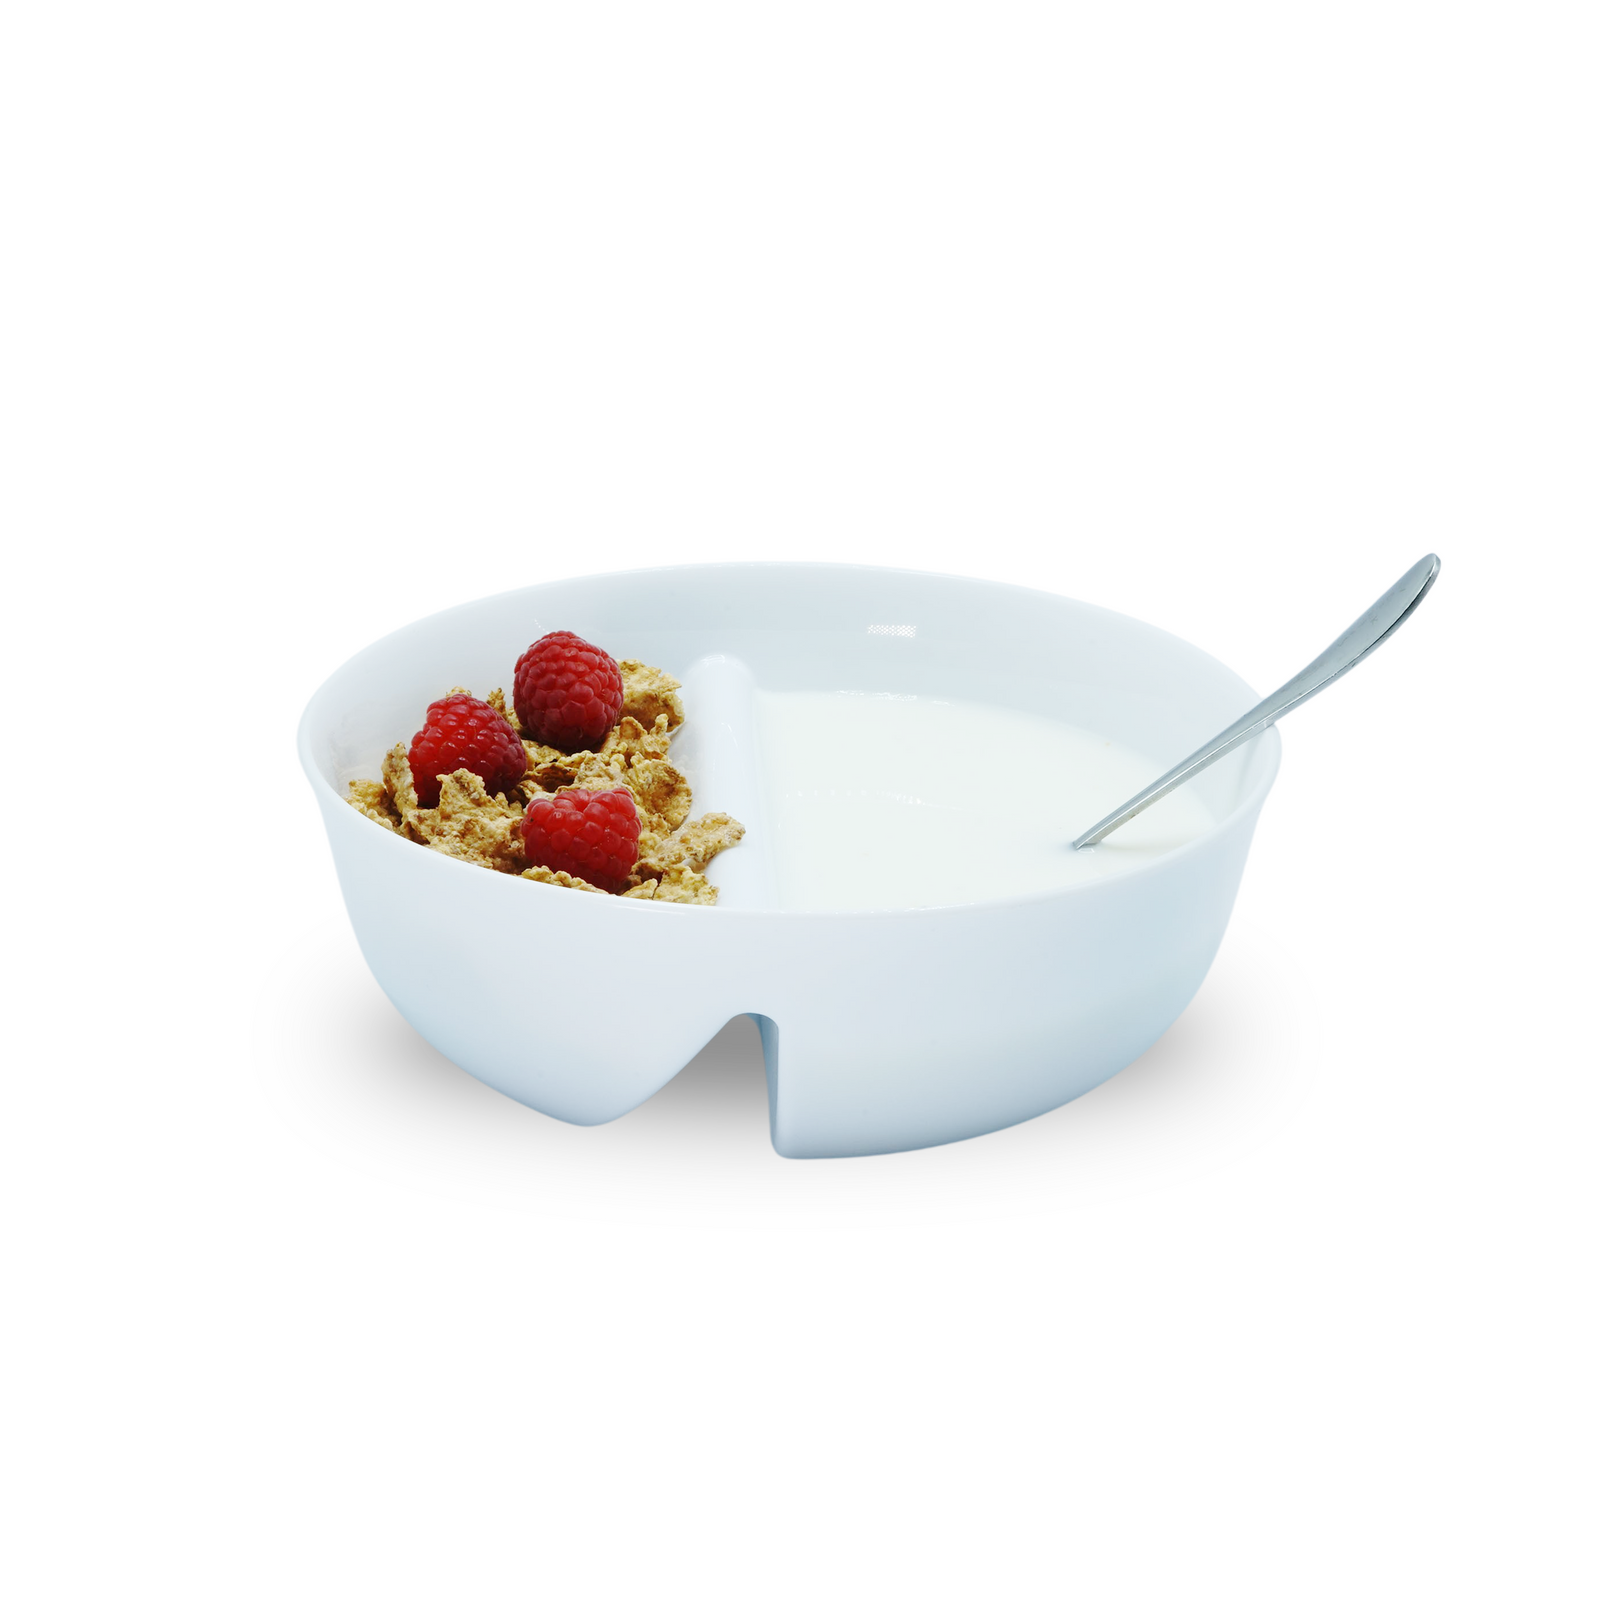 travel cereal bowl separate milk